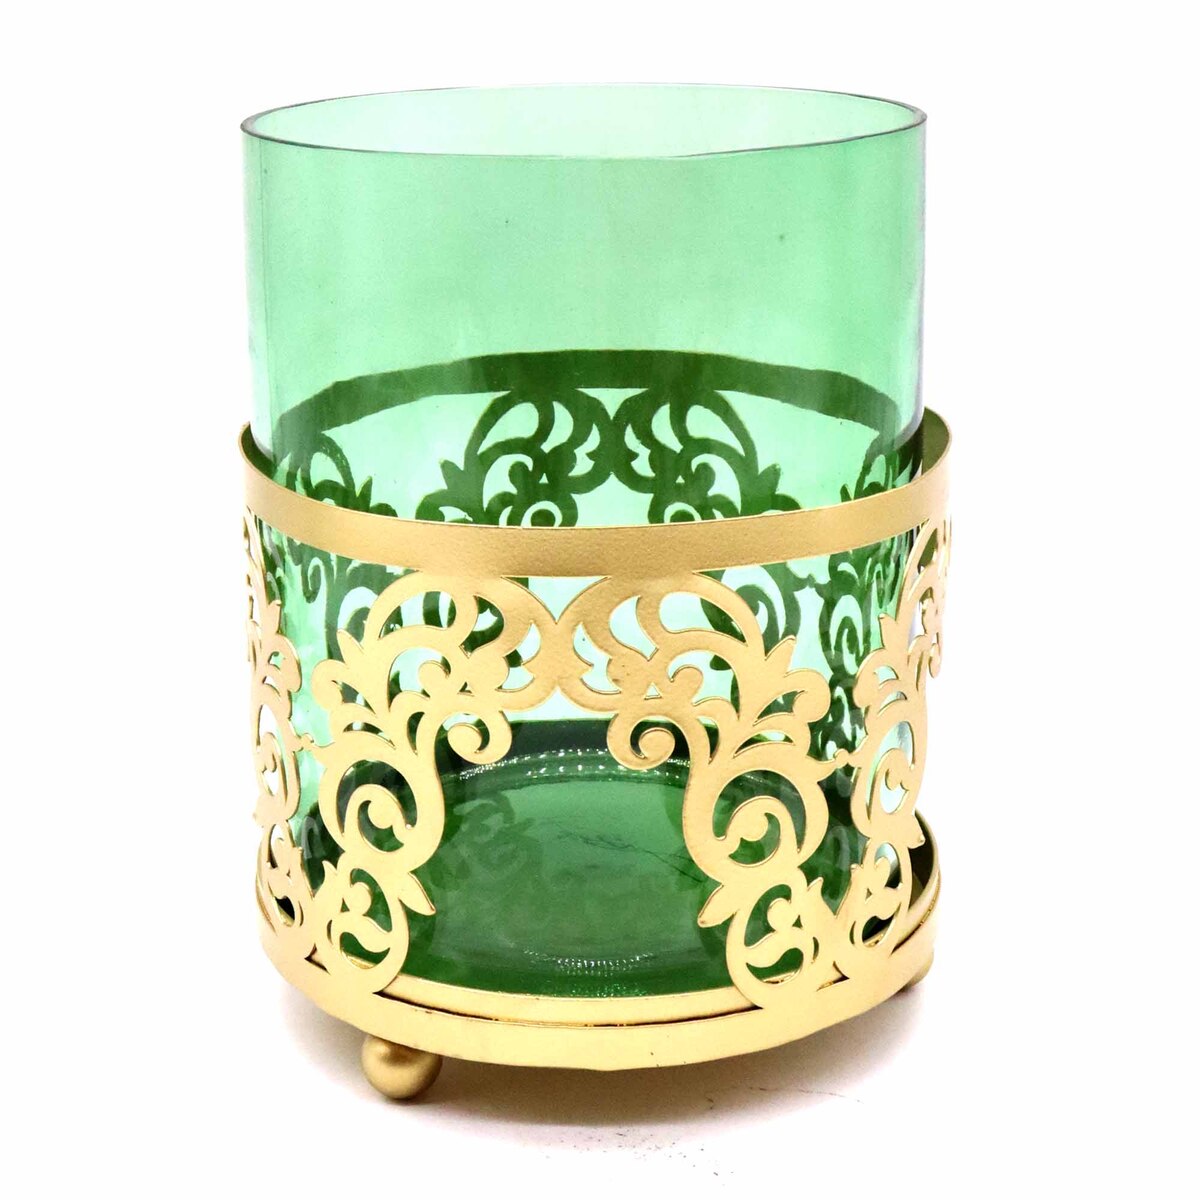 Maple Leaf Tealight Candle Holder Green